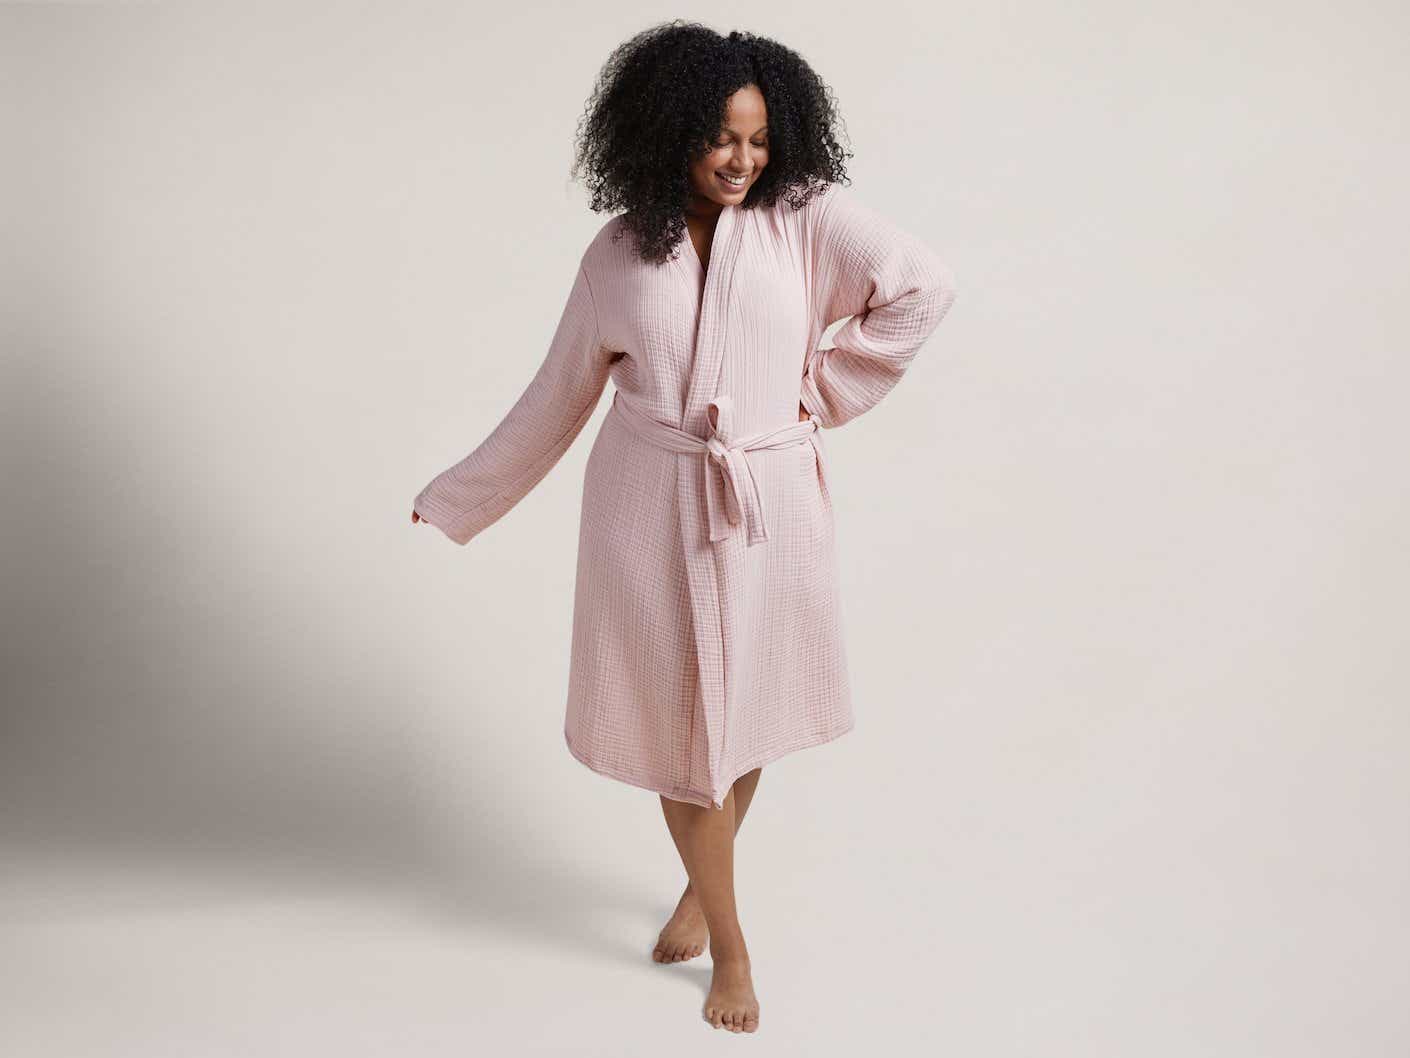 A woman wears a soft, lightweight, mid length robe.